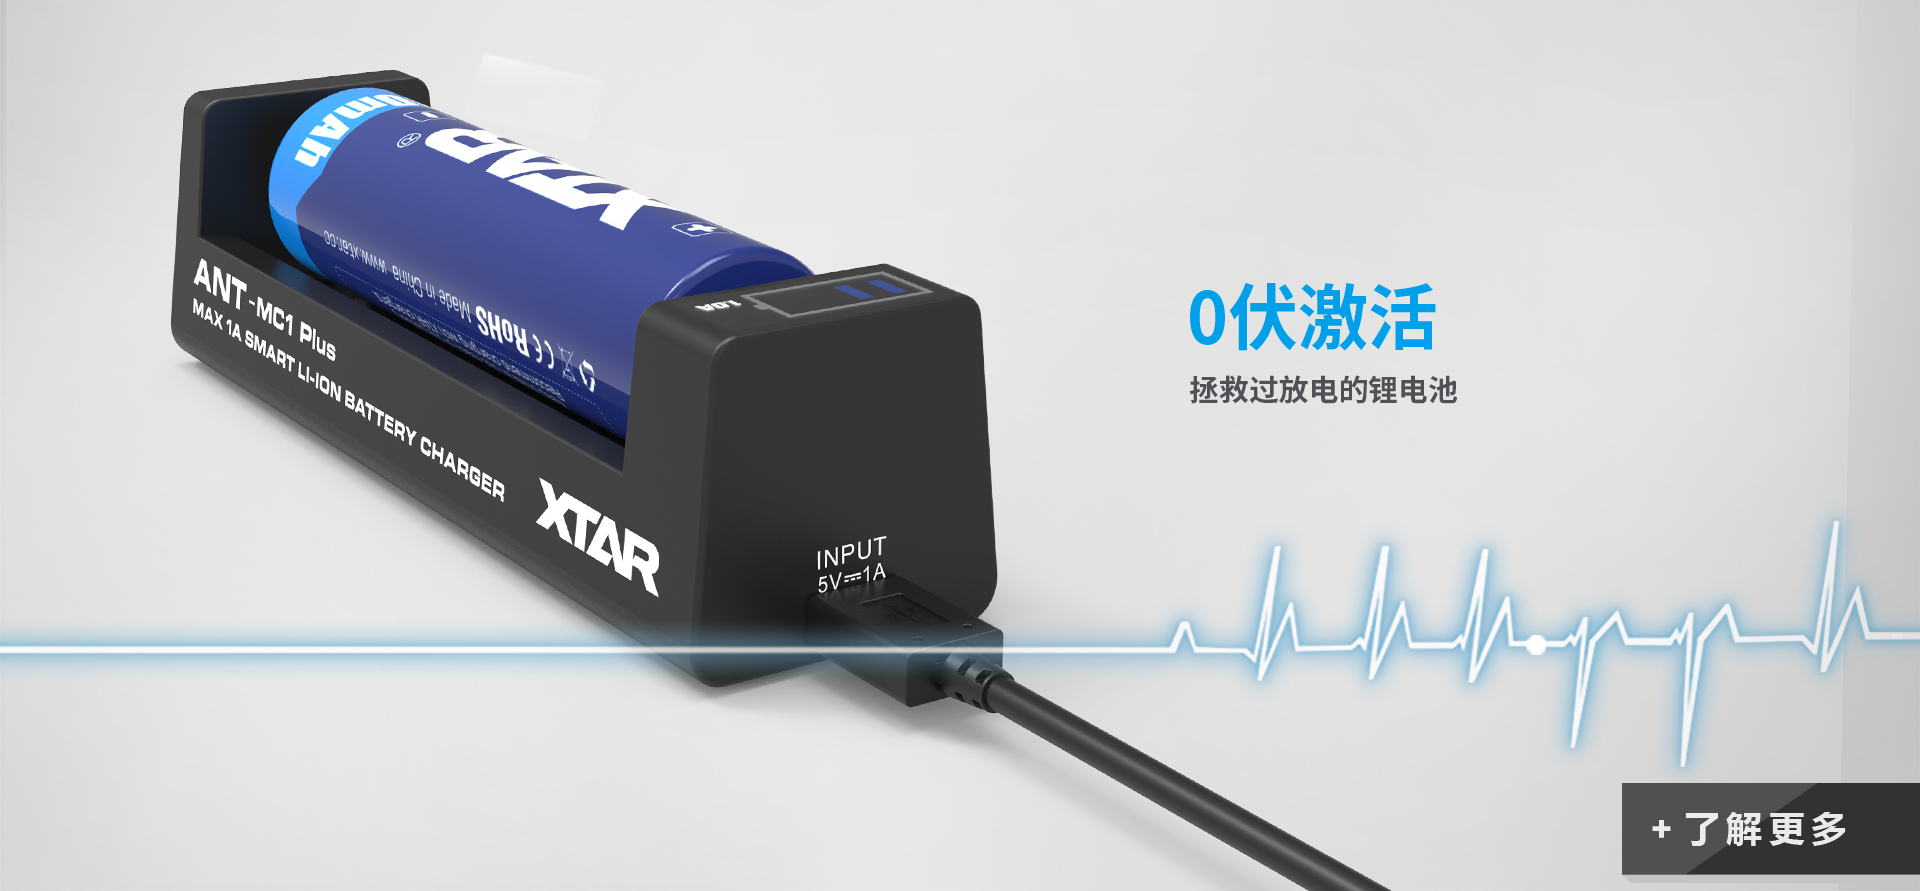 XTAR ANT MC1 Plus智能充电器